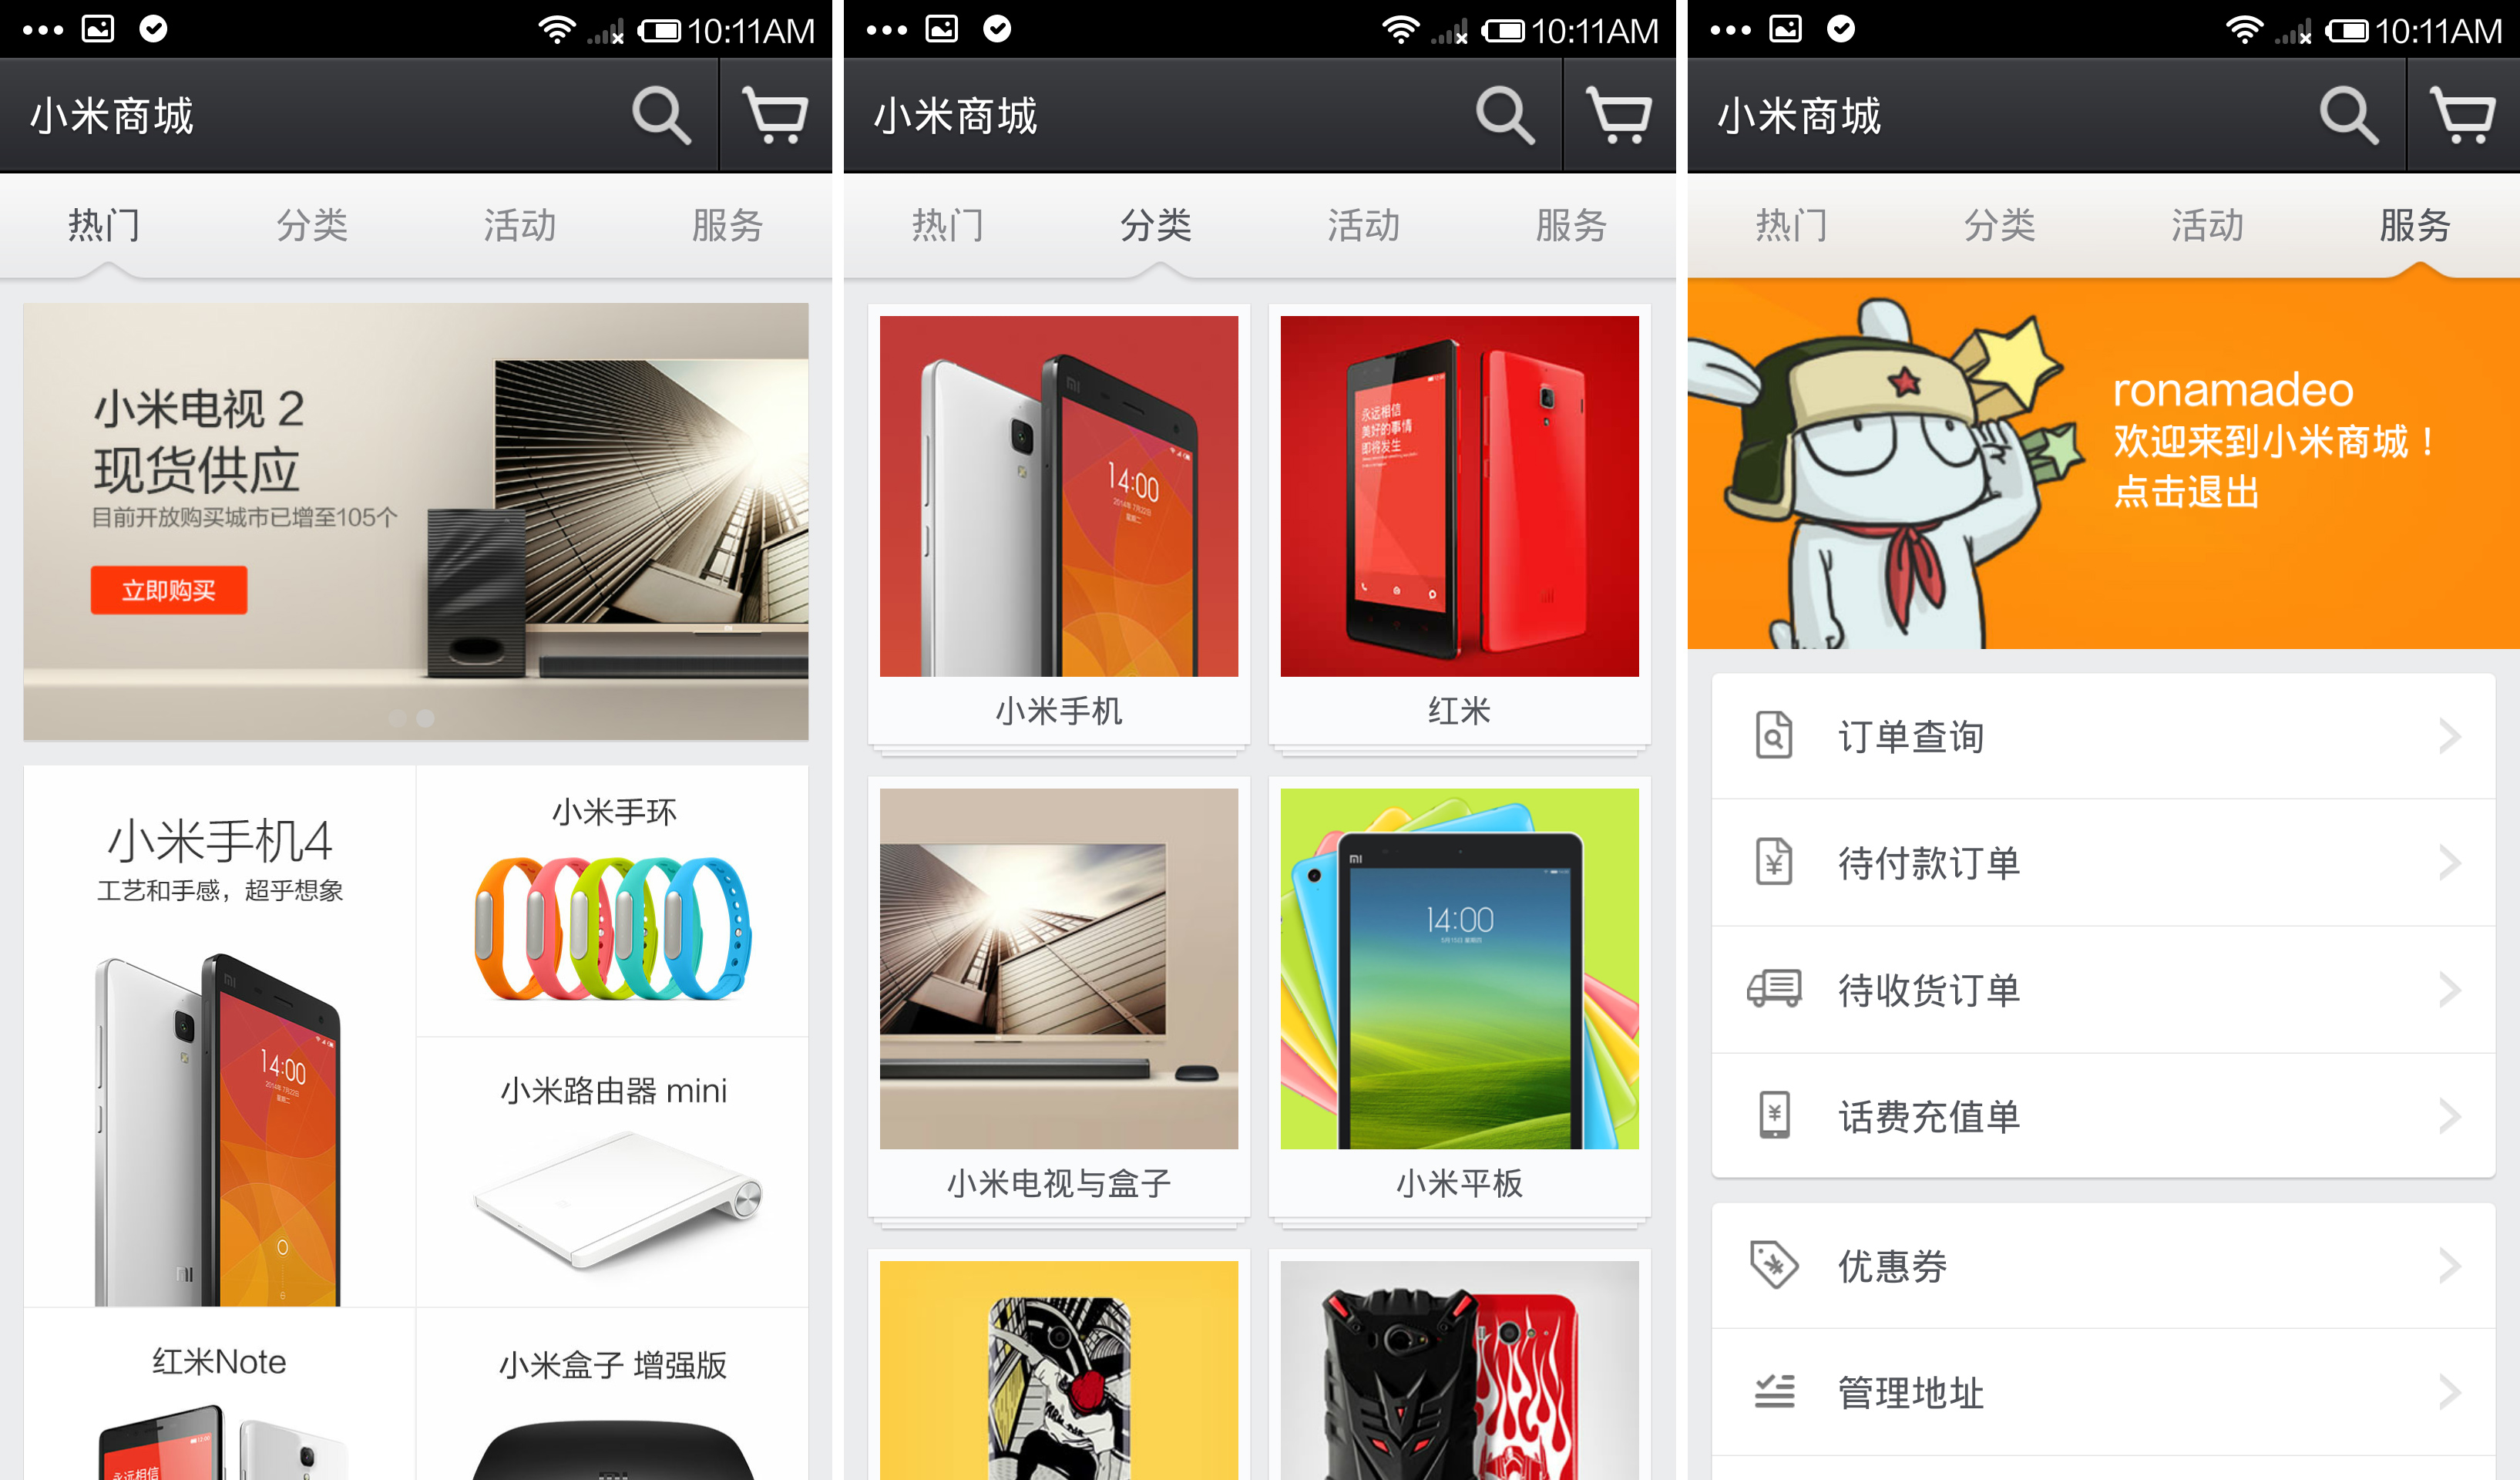 Xiaomi Online Store China 3270x1920 Wallpaper Teahub Io